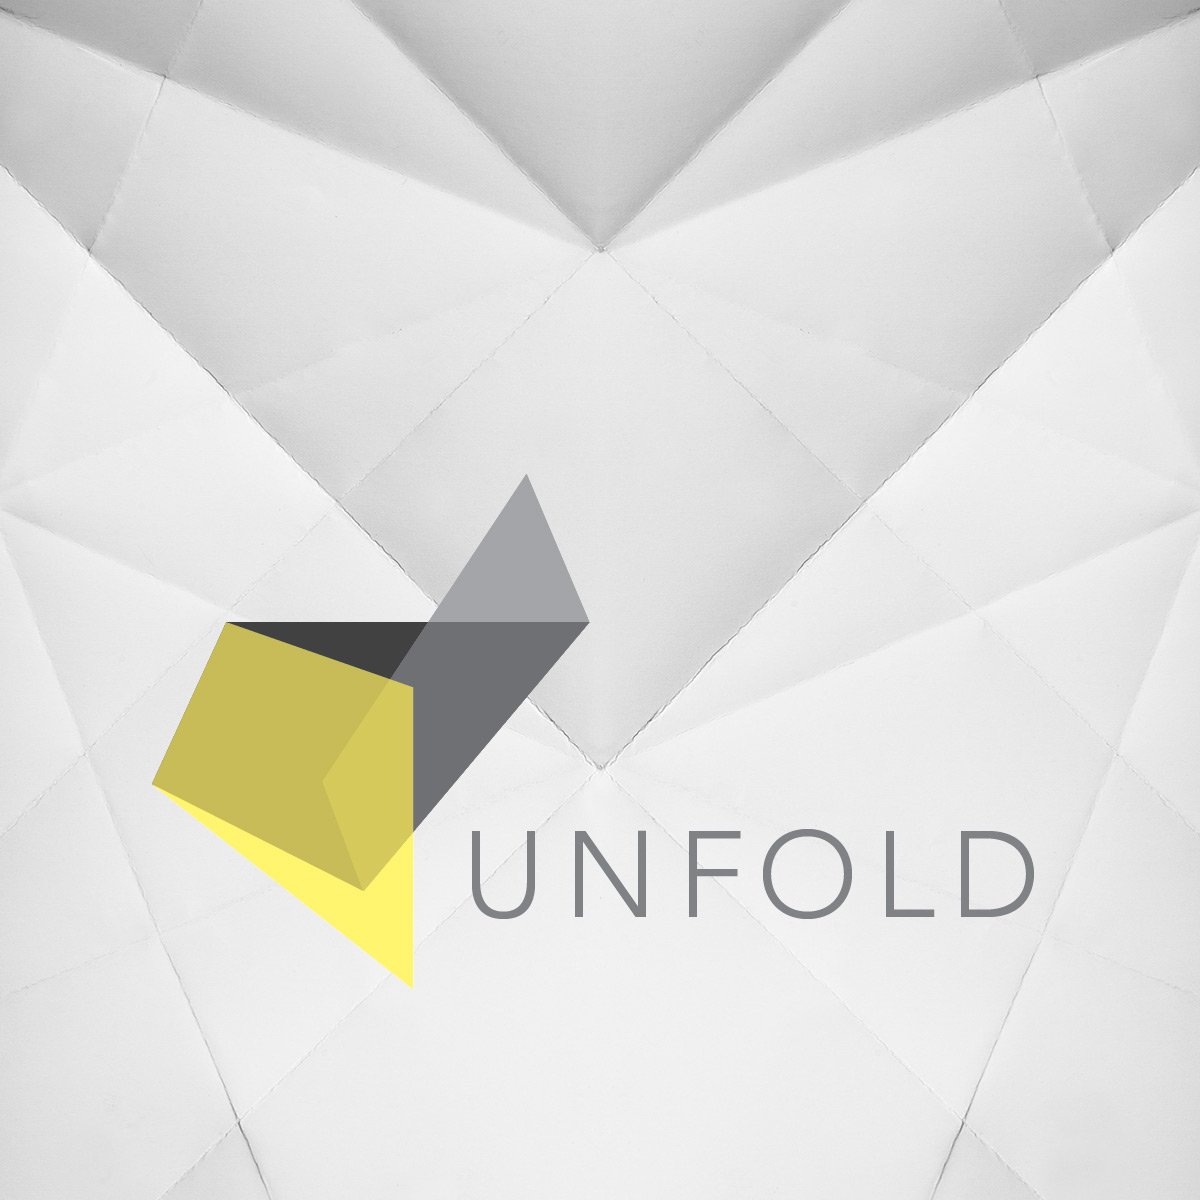 Unfold logo on paper